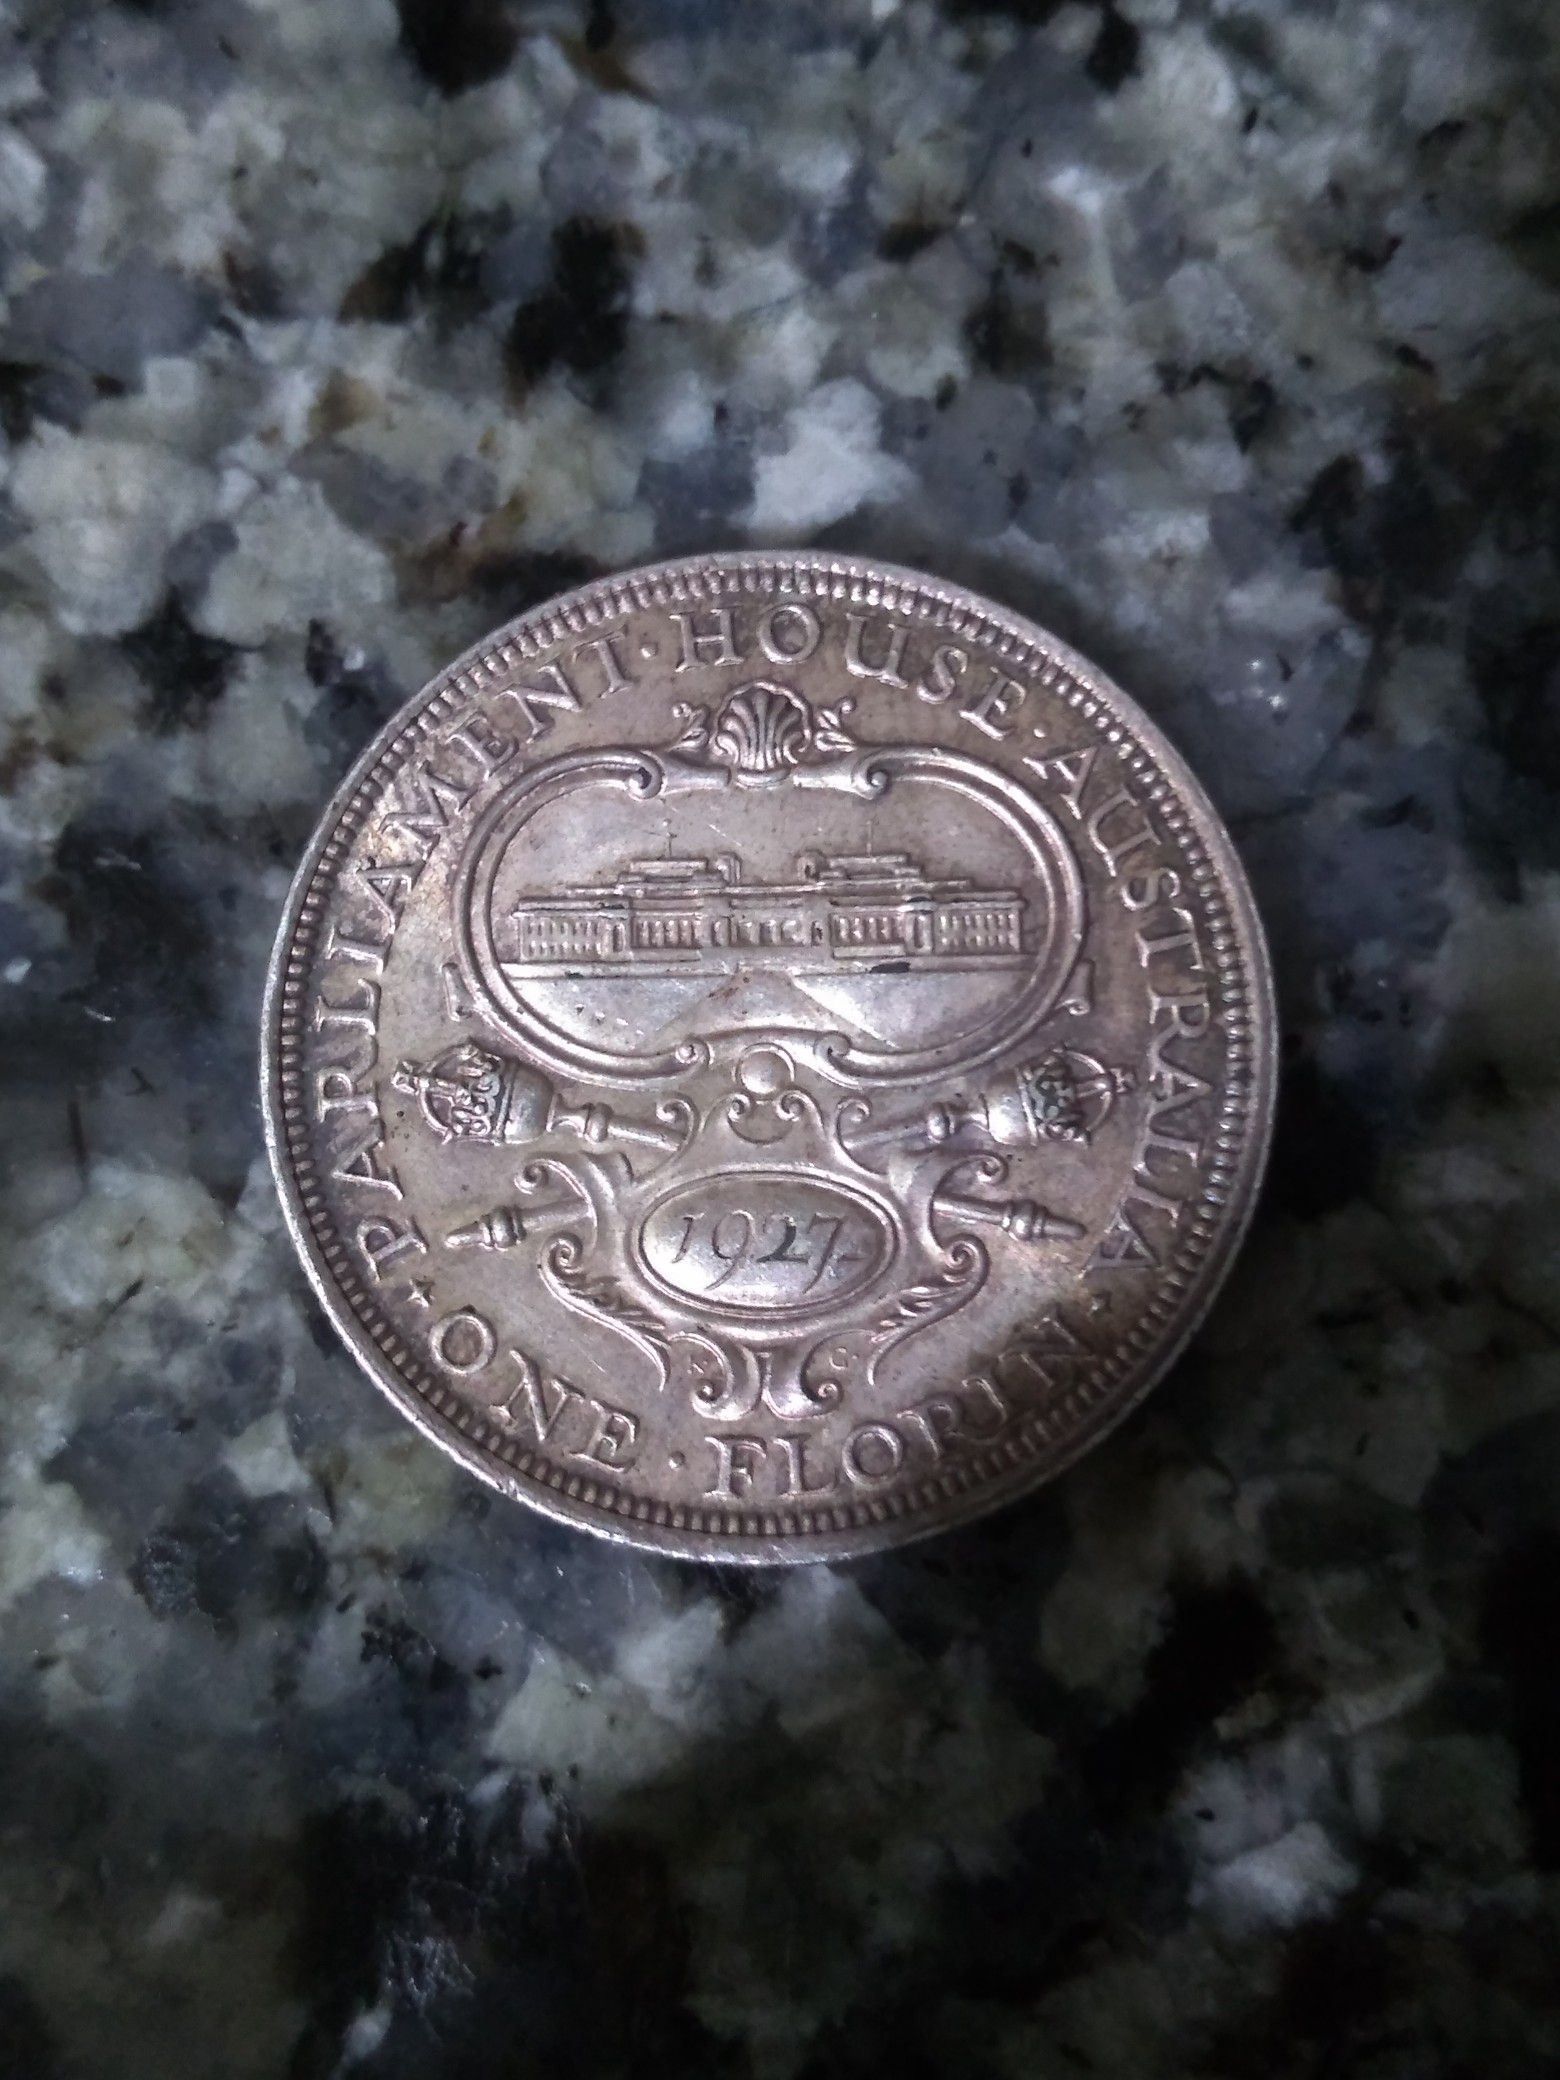 2 coins both are Australia florin 1927 parliament